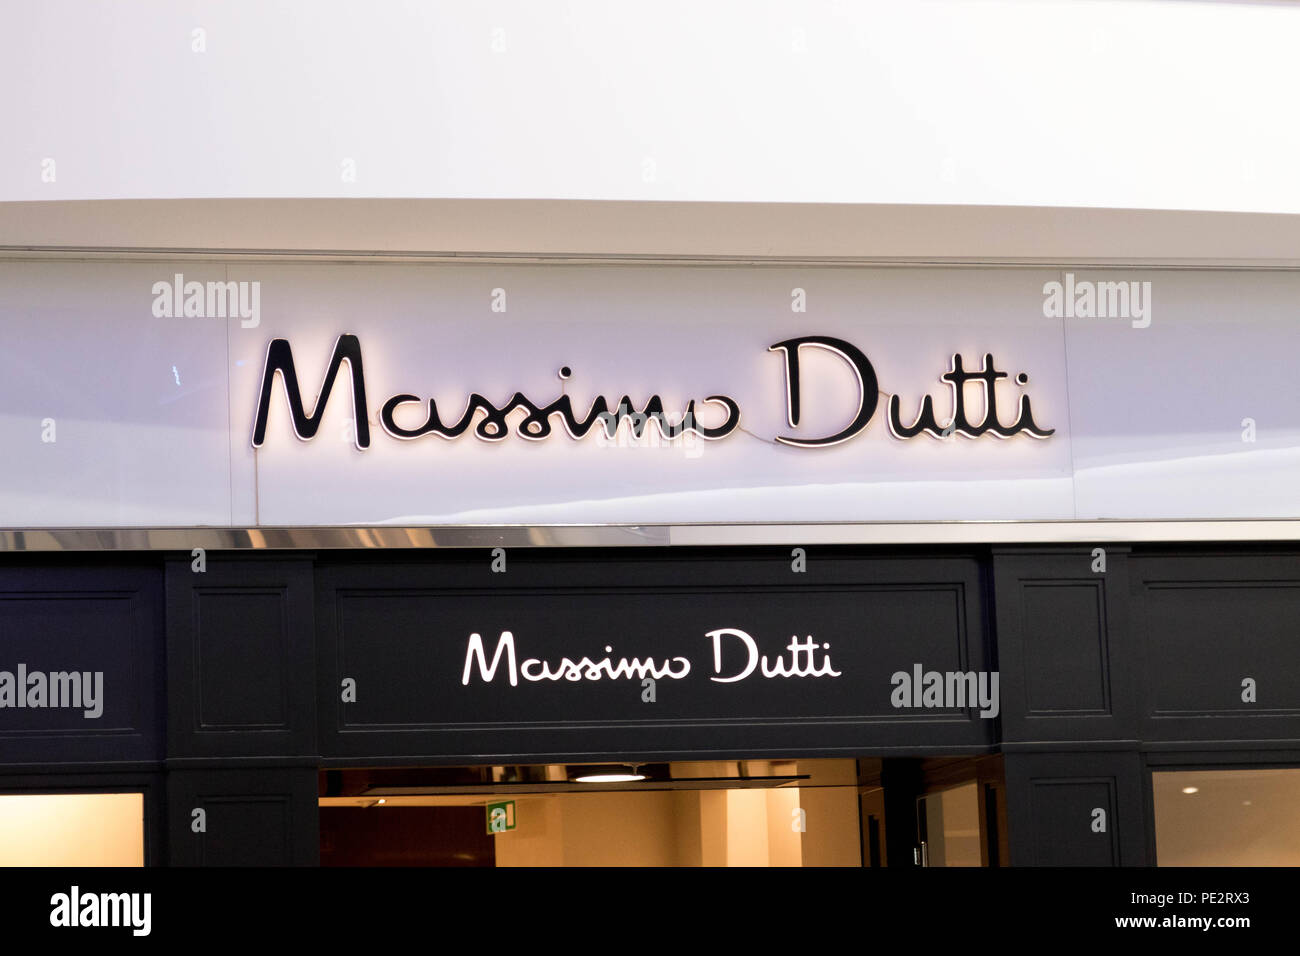 Massimo Dutti shop logo clothing brand Stock Photo - Alamy